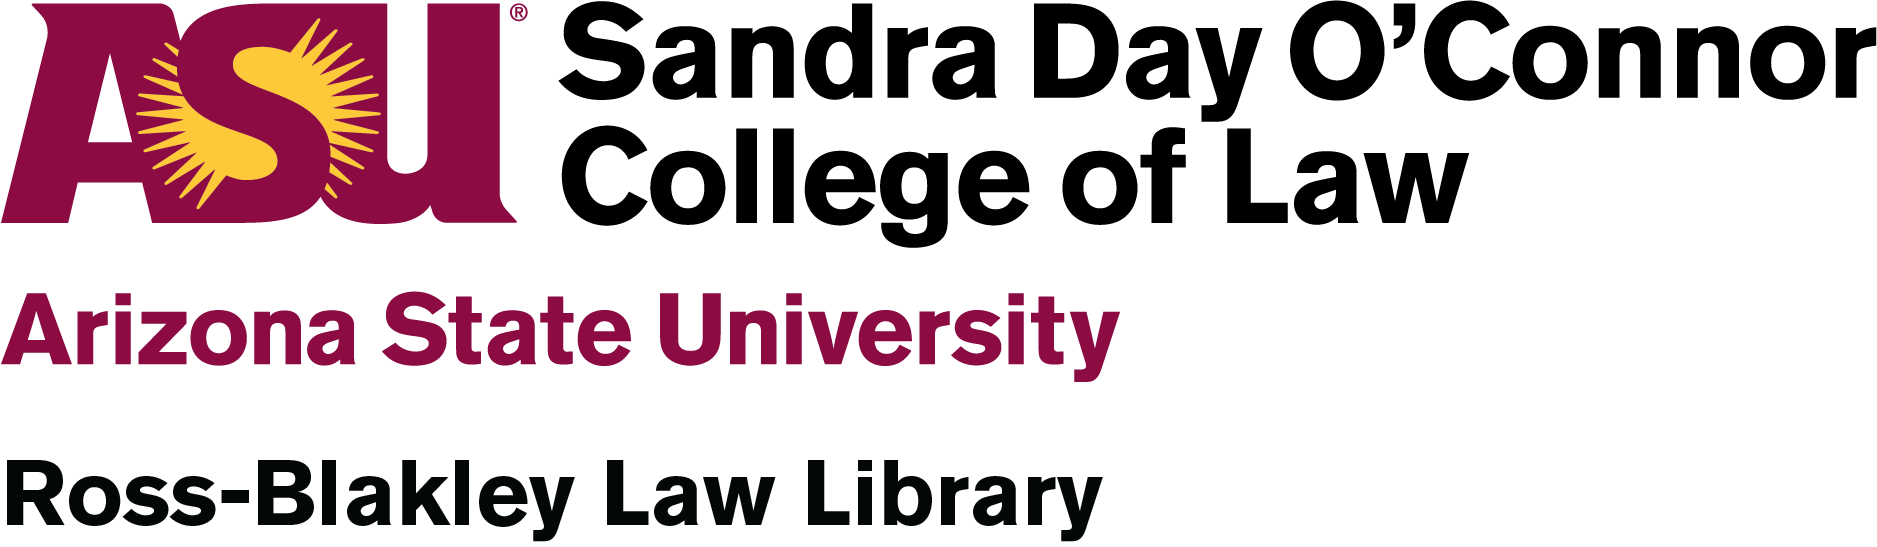 Ross-Blakley Law Library Blog